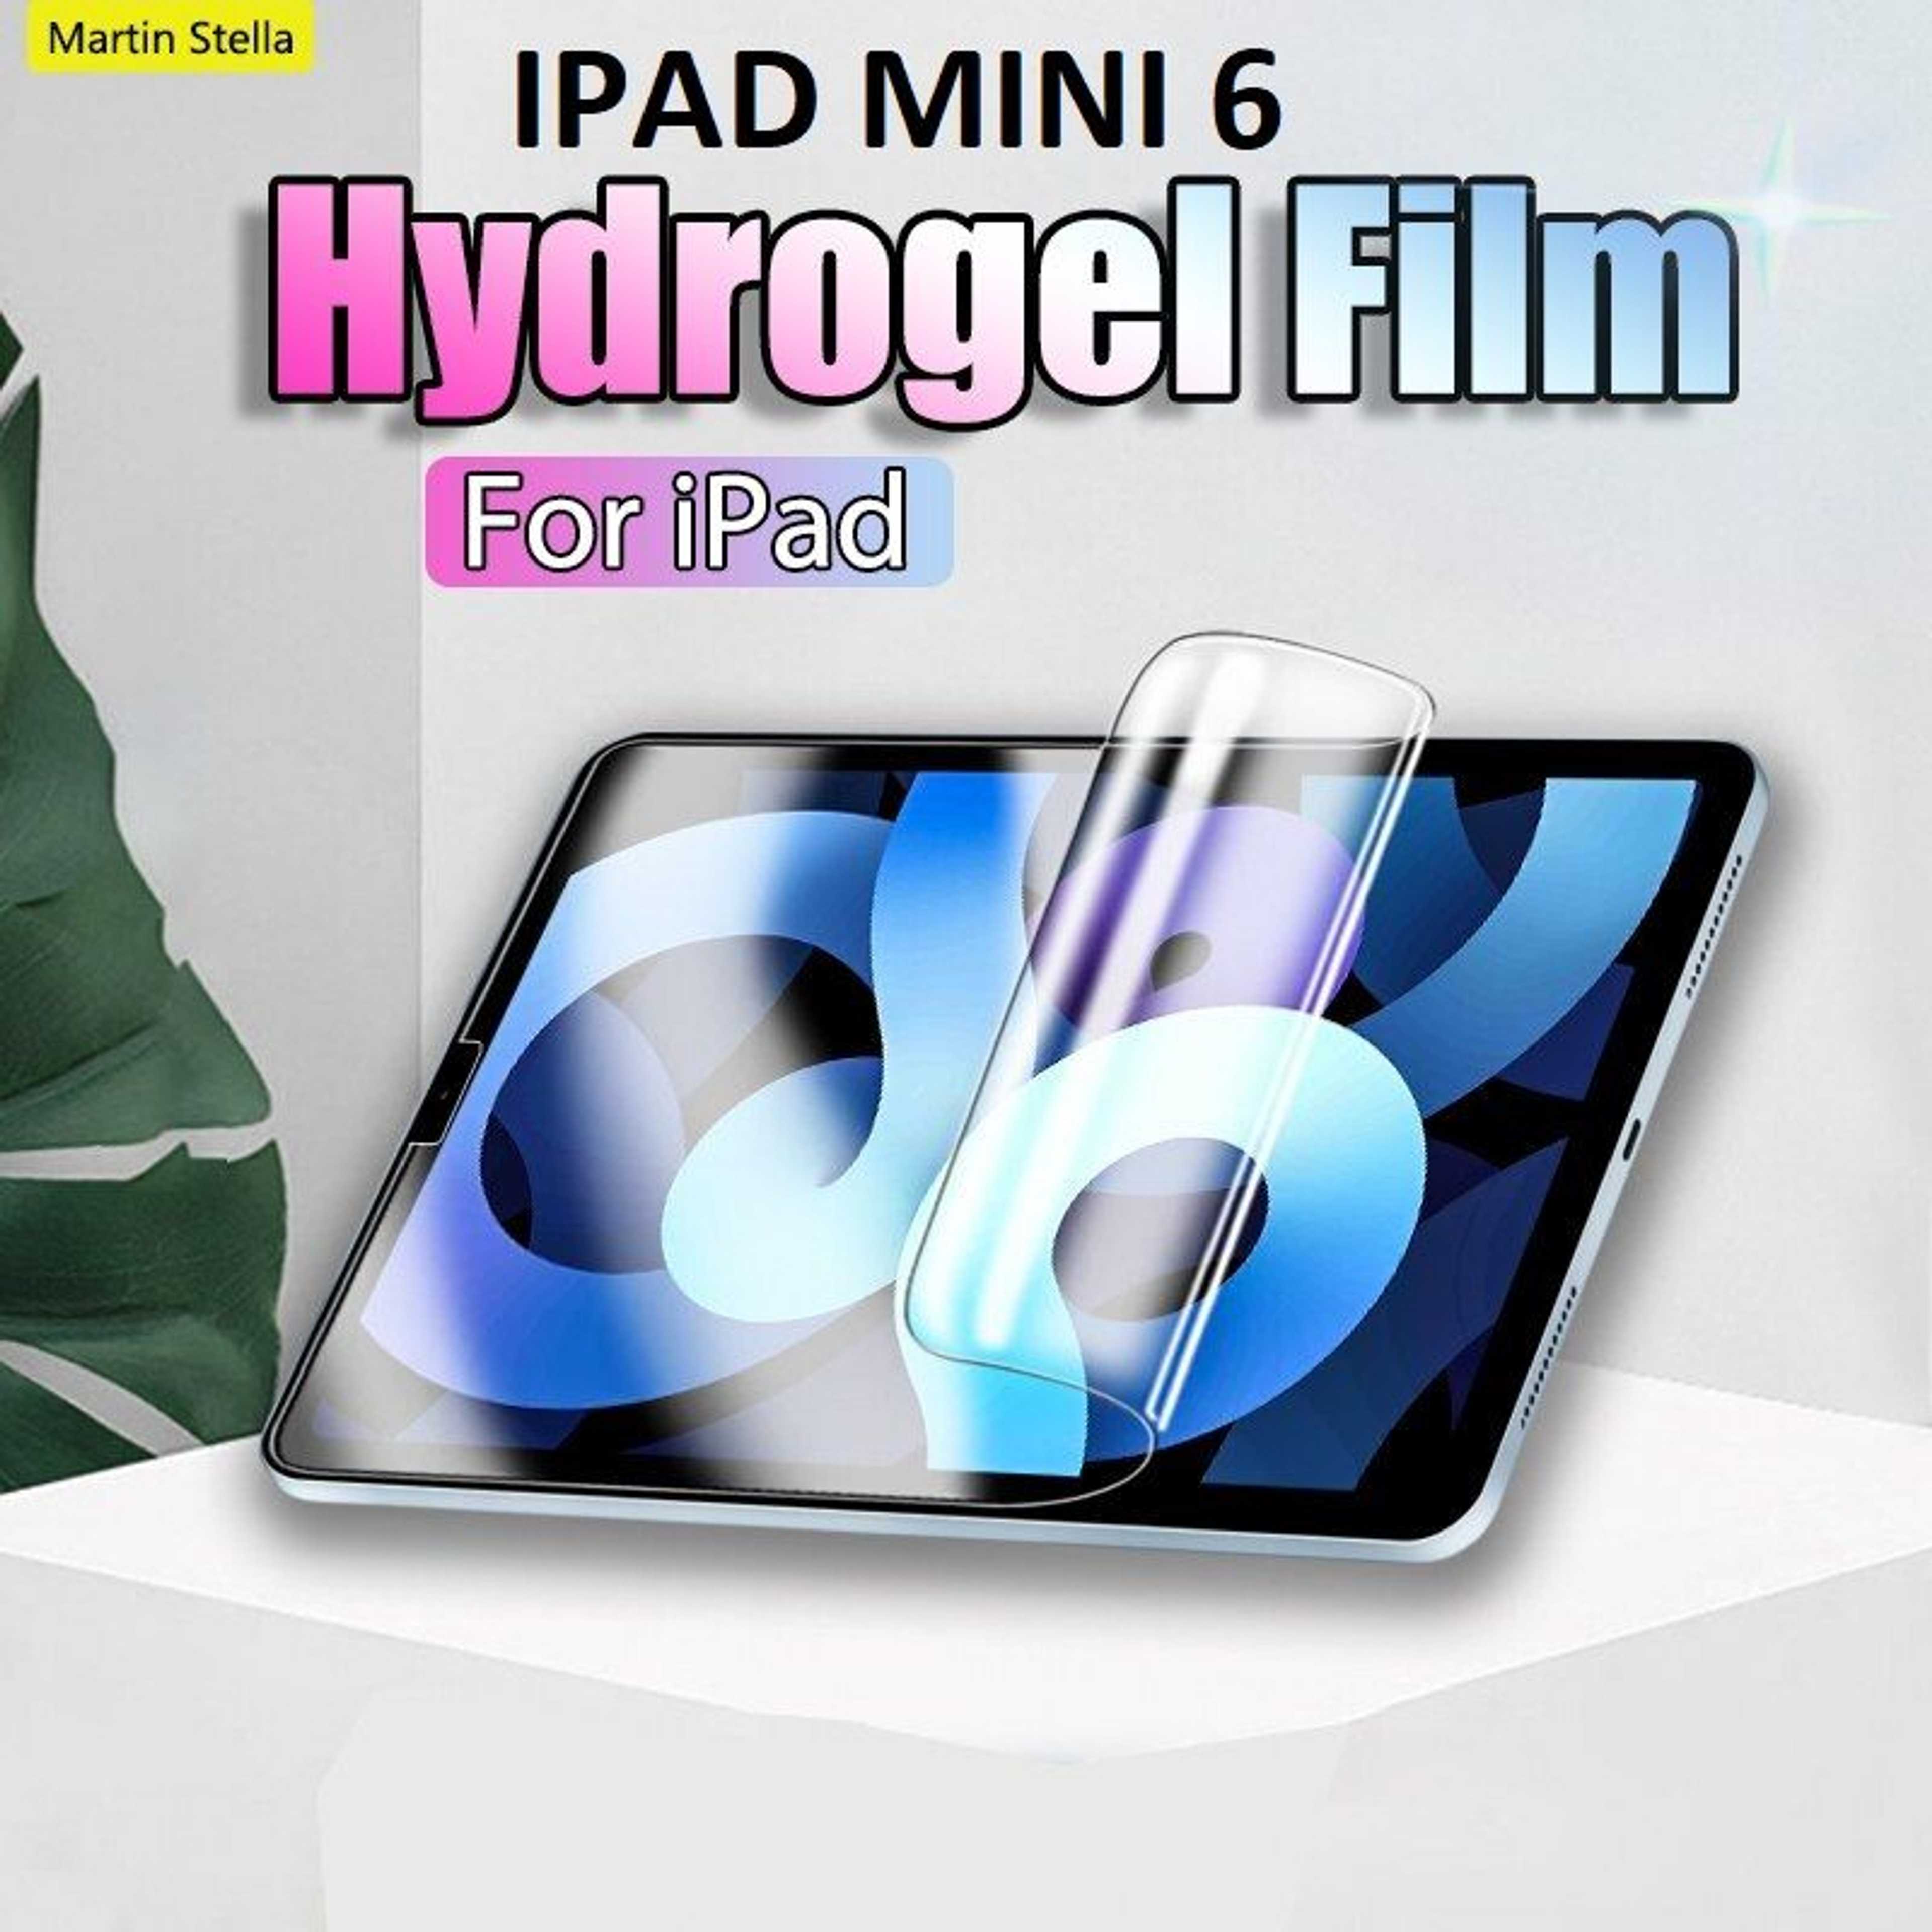 iPad Mini 6 Jelly Screen Protector Hydrogel Film For IPAD MINI 6